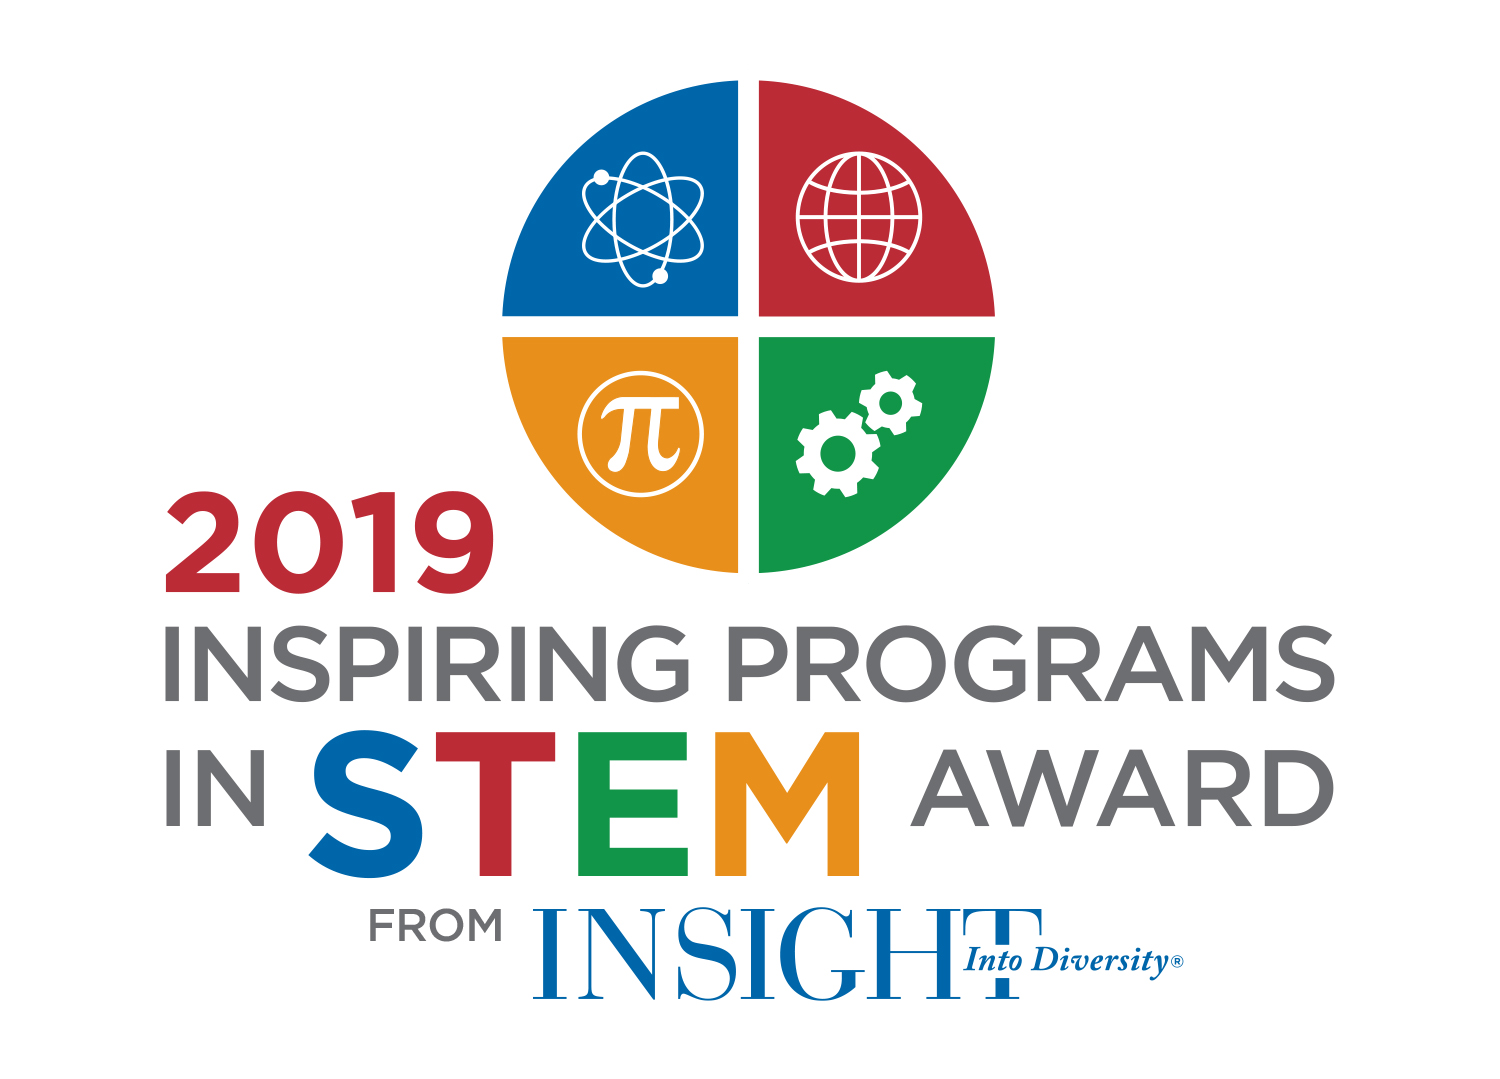 Logo for 2019 Inspiring Programs in STEM Award from Insight Into Diversity